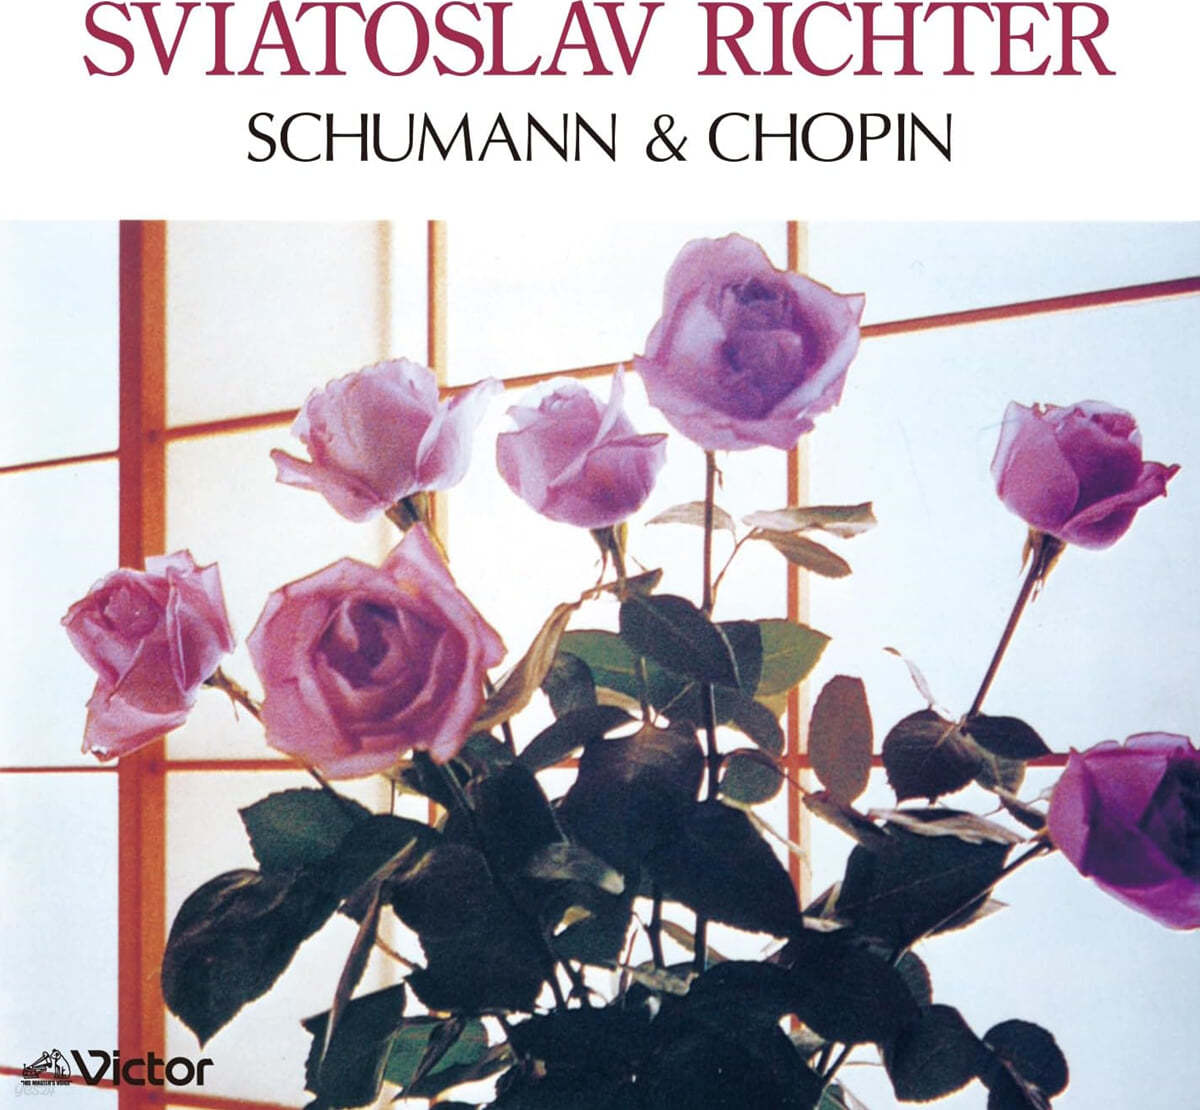 Sviatoslav Richter 리히터 1979년 일본 실황연주 1집 - 슈만과 쇼팽 작품 연주집 (1979 Japan Live I Schumann & Chopin)